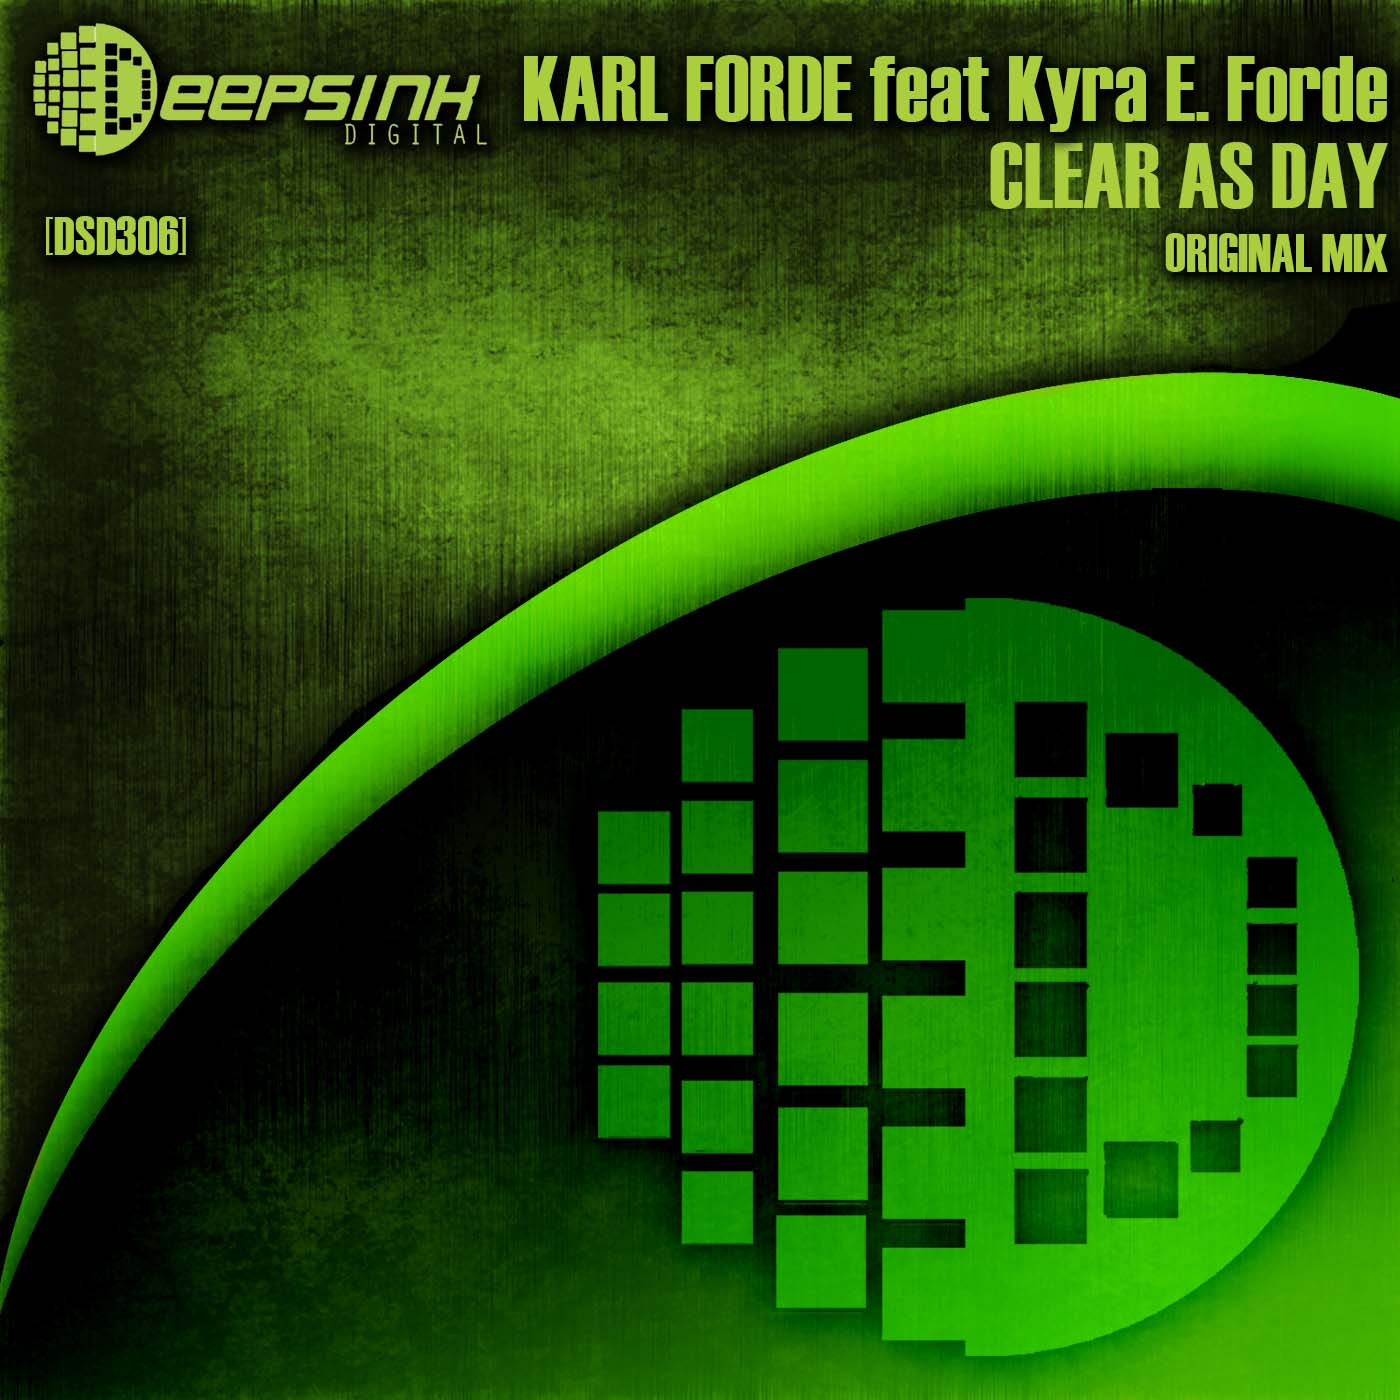 Karl Forde feat. Kyra E. Forde presents Clear As Day on Deepsink Digital